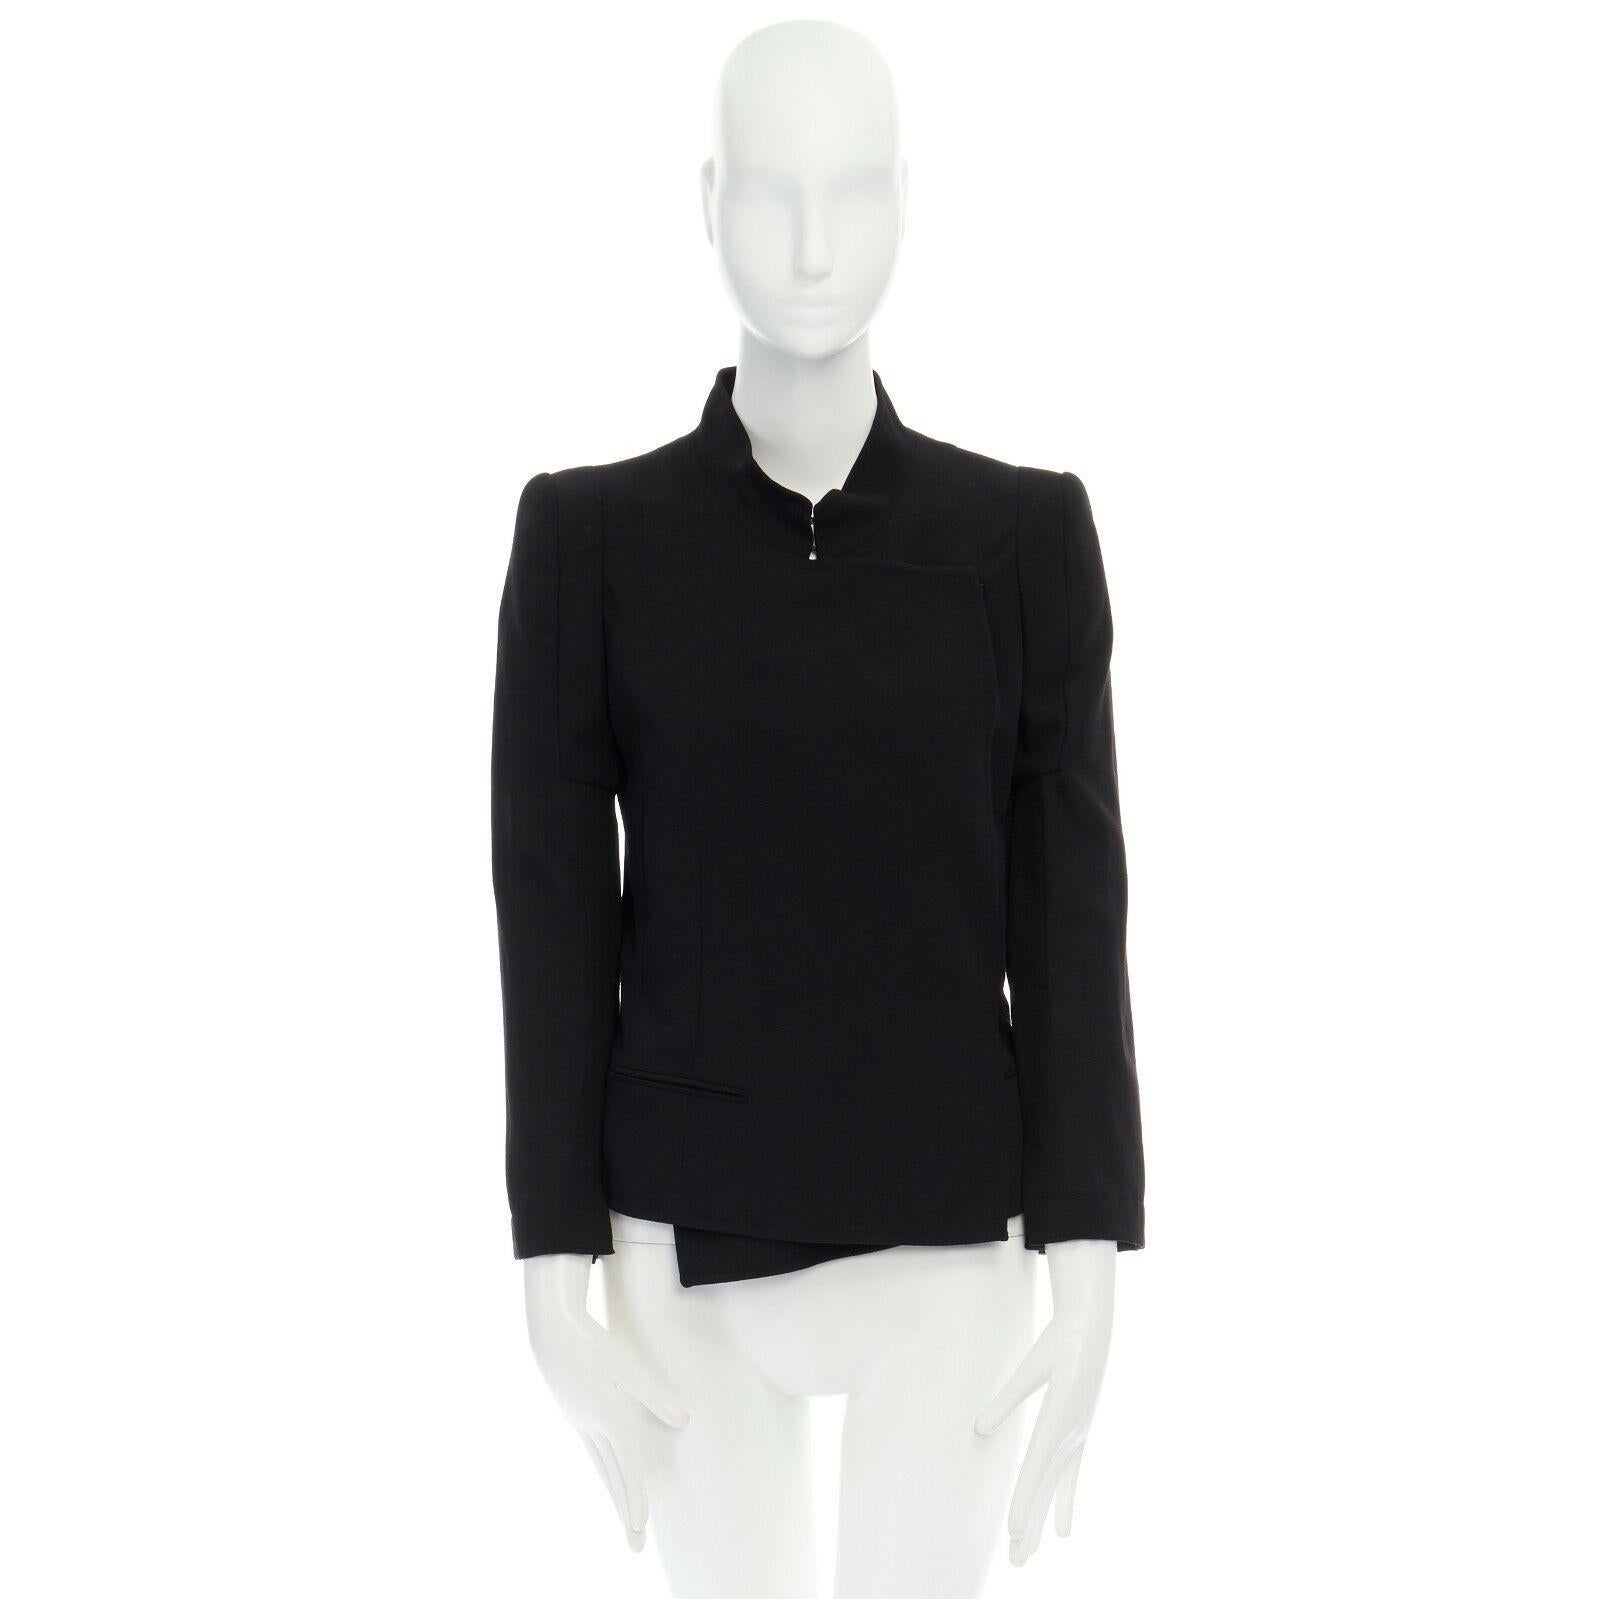 Black ANN DEMEULEMEESTER black draped front classic wool blazer jacket FR36 US2 UK8 S